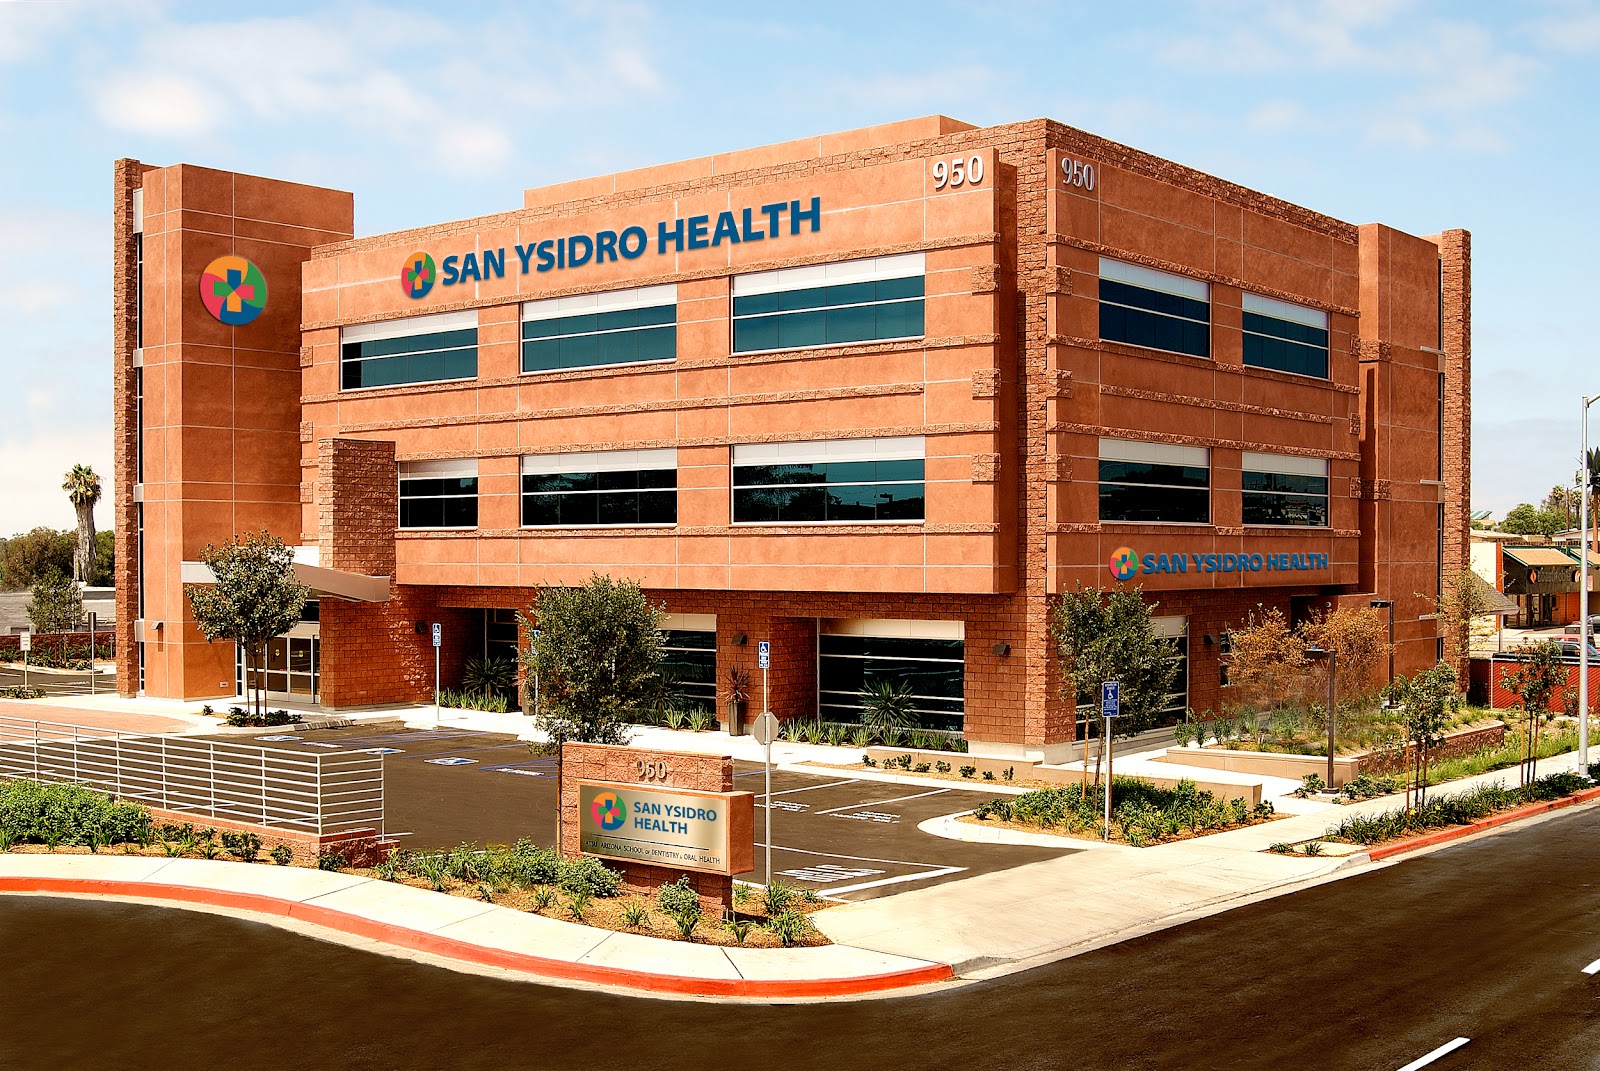 San Ysidro Health - King-Chavez Health Center